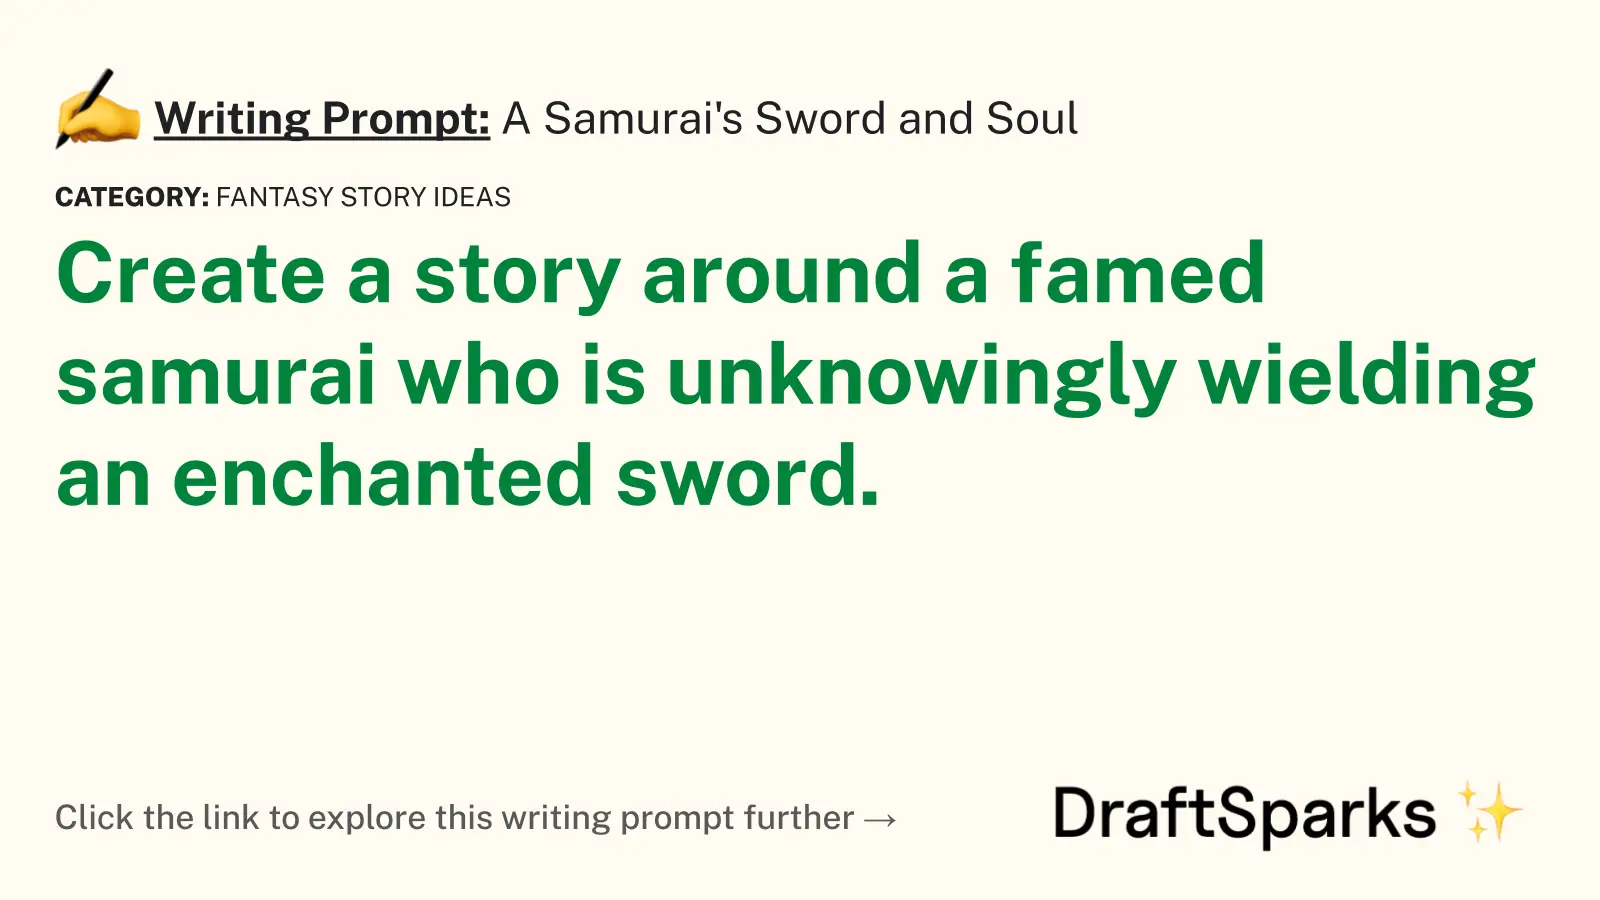 A Samurai’s Sword and Soul